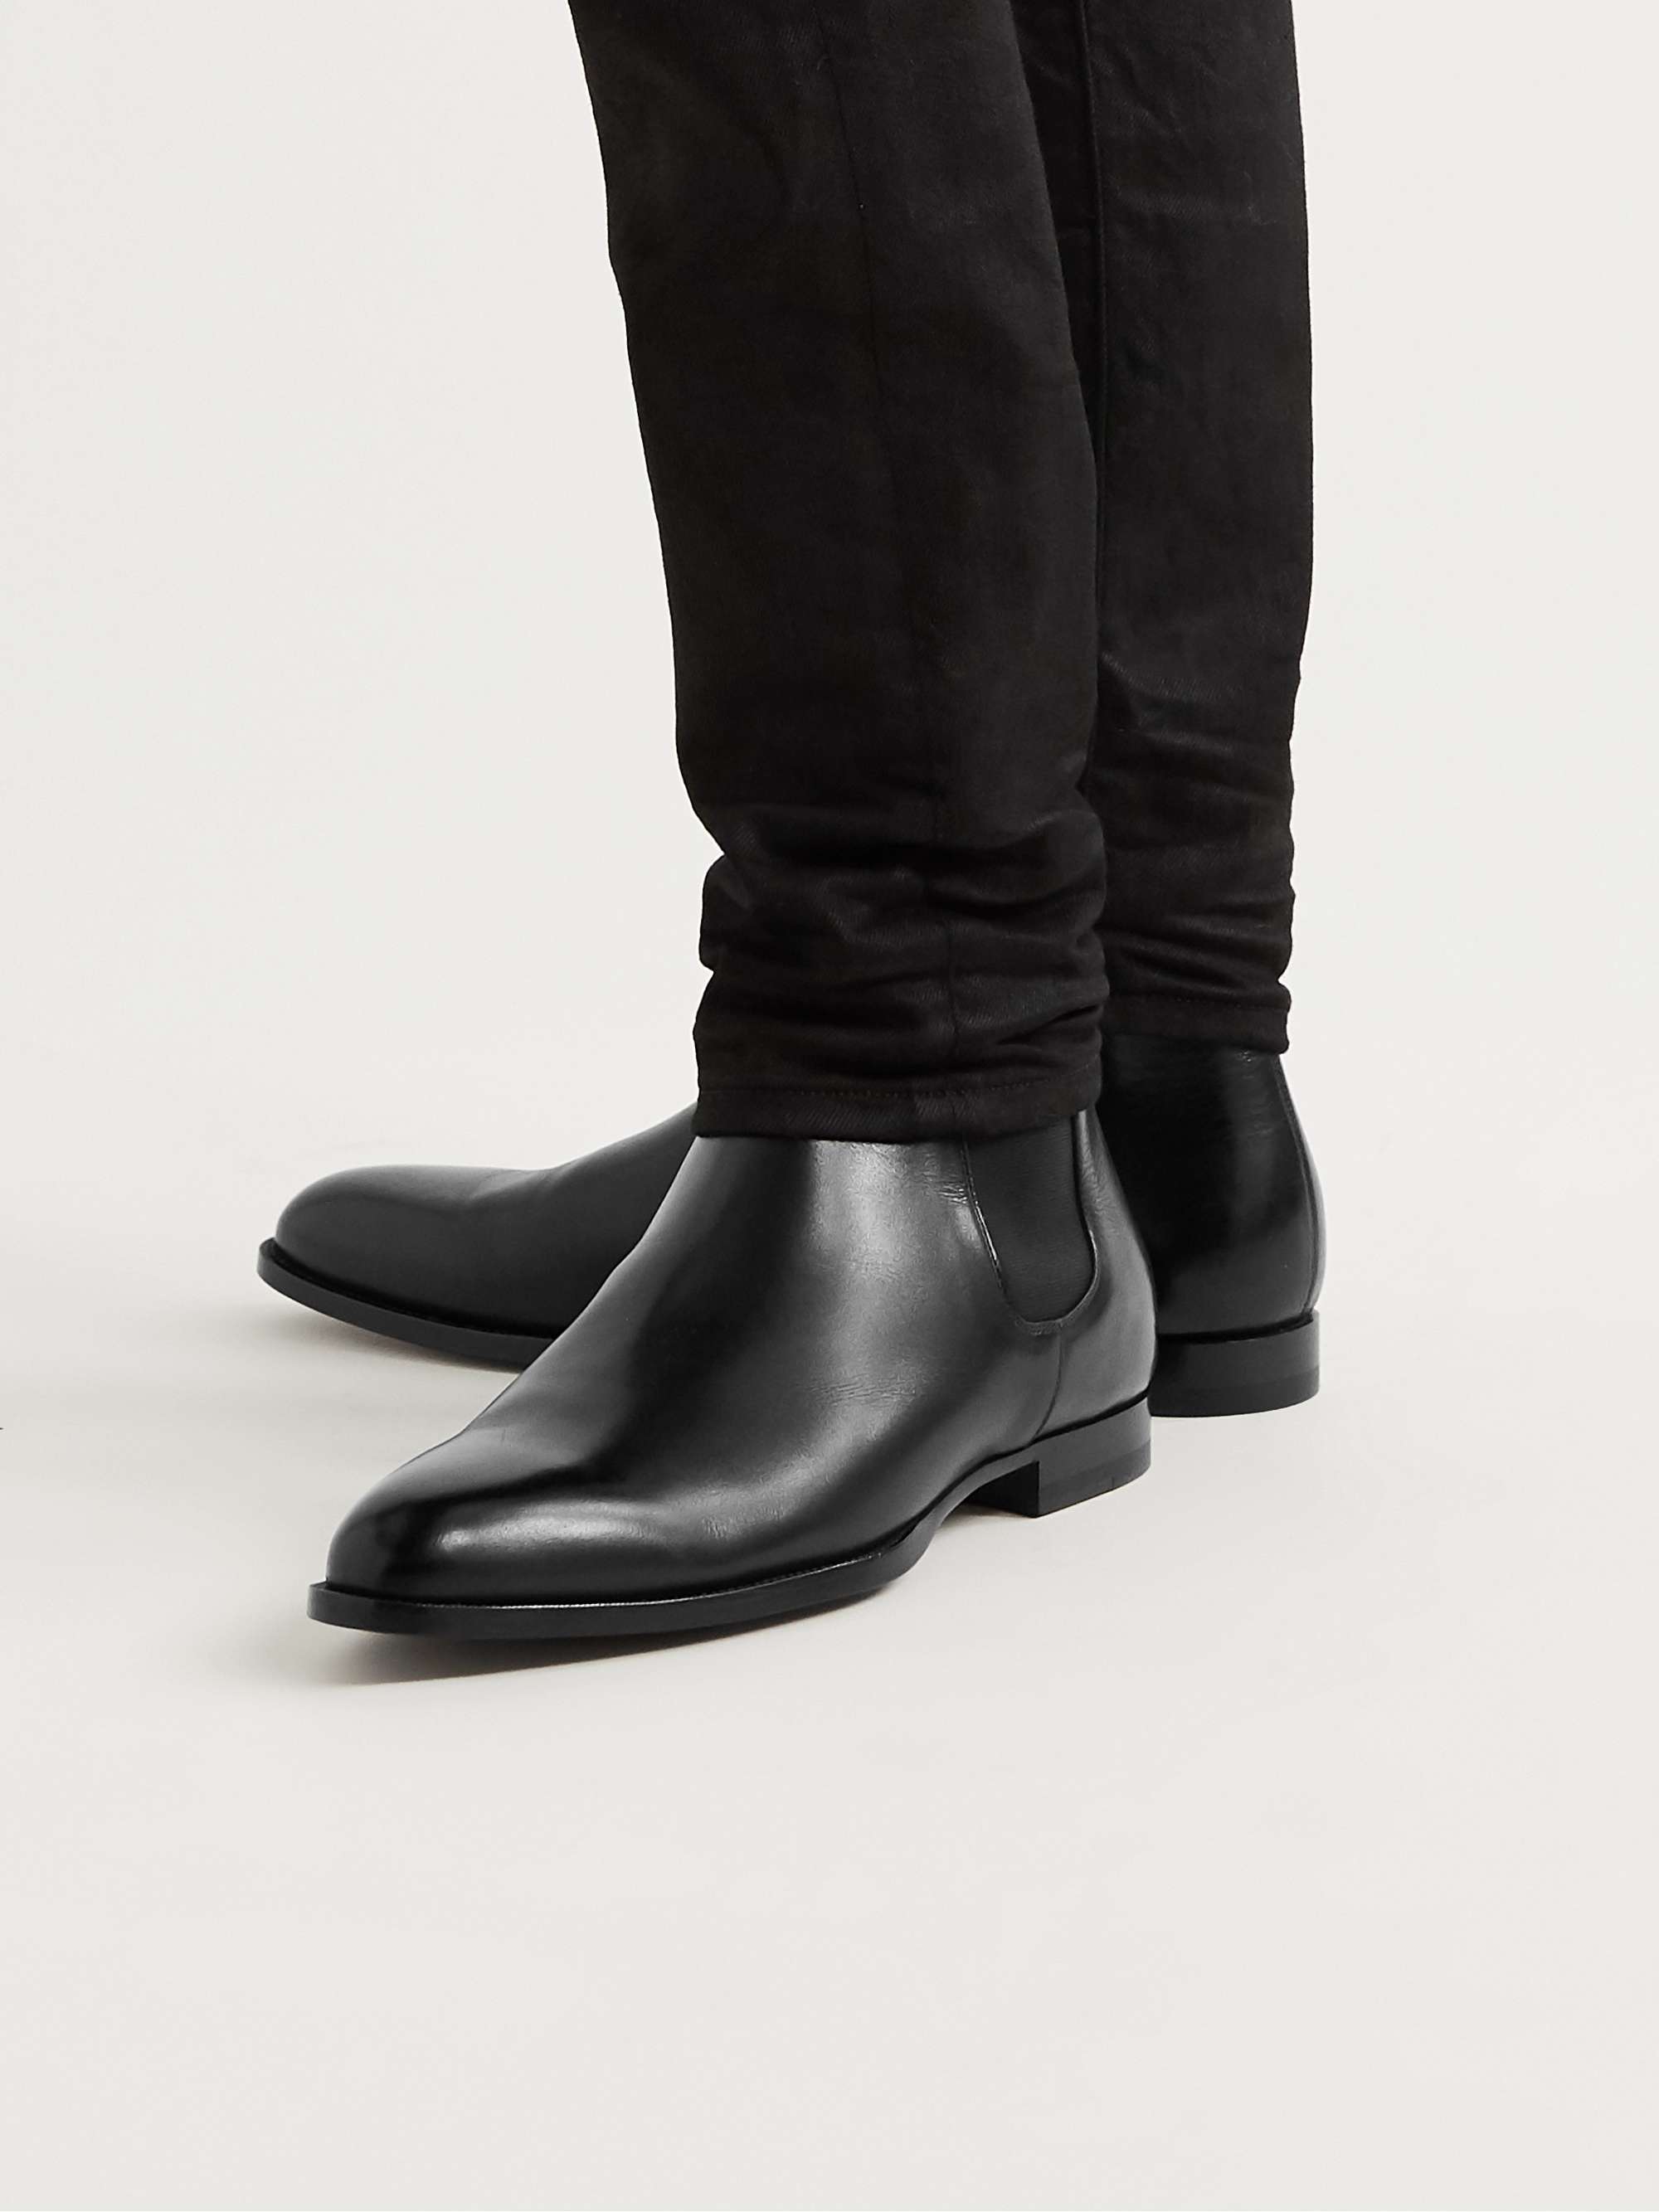 CELINE HOMME Leather Chelsea Boots for Men | MR PORTER